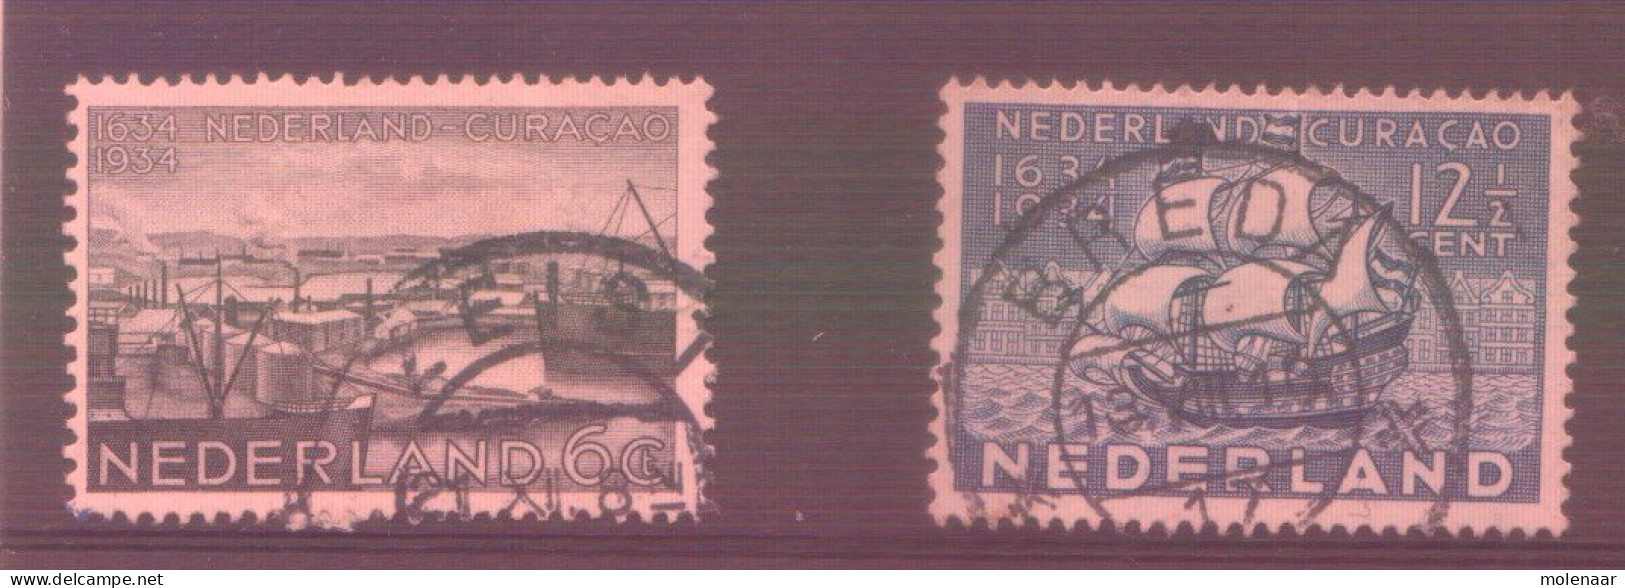 Postzegels > Europa > Nederland > Periode 1891-1948 (Wilhelmina) > 1891-1909 > 267-268 Gebruikt (11766) - Usados